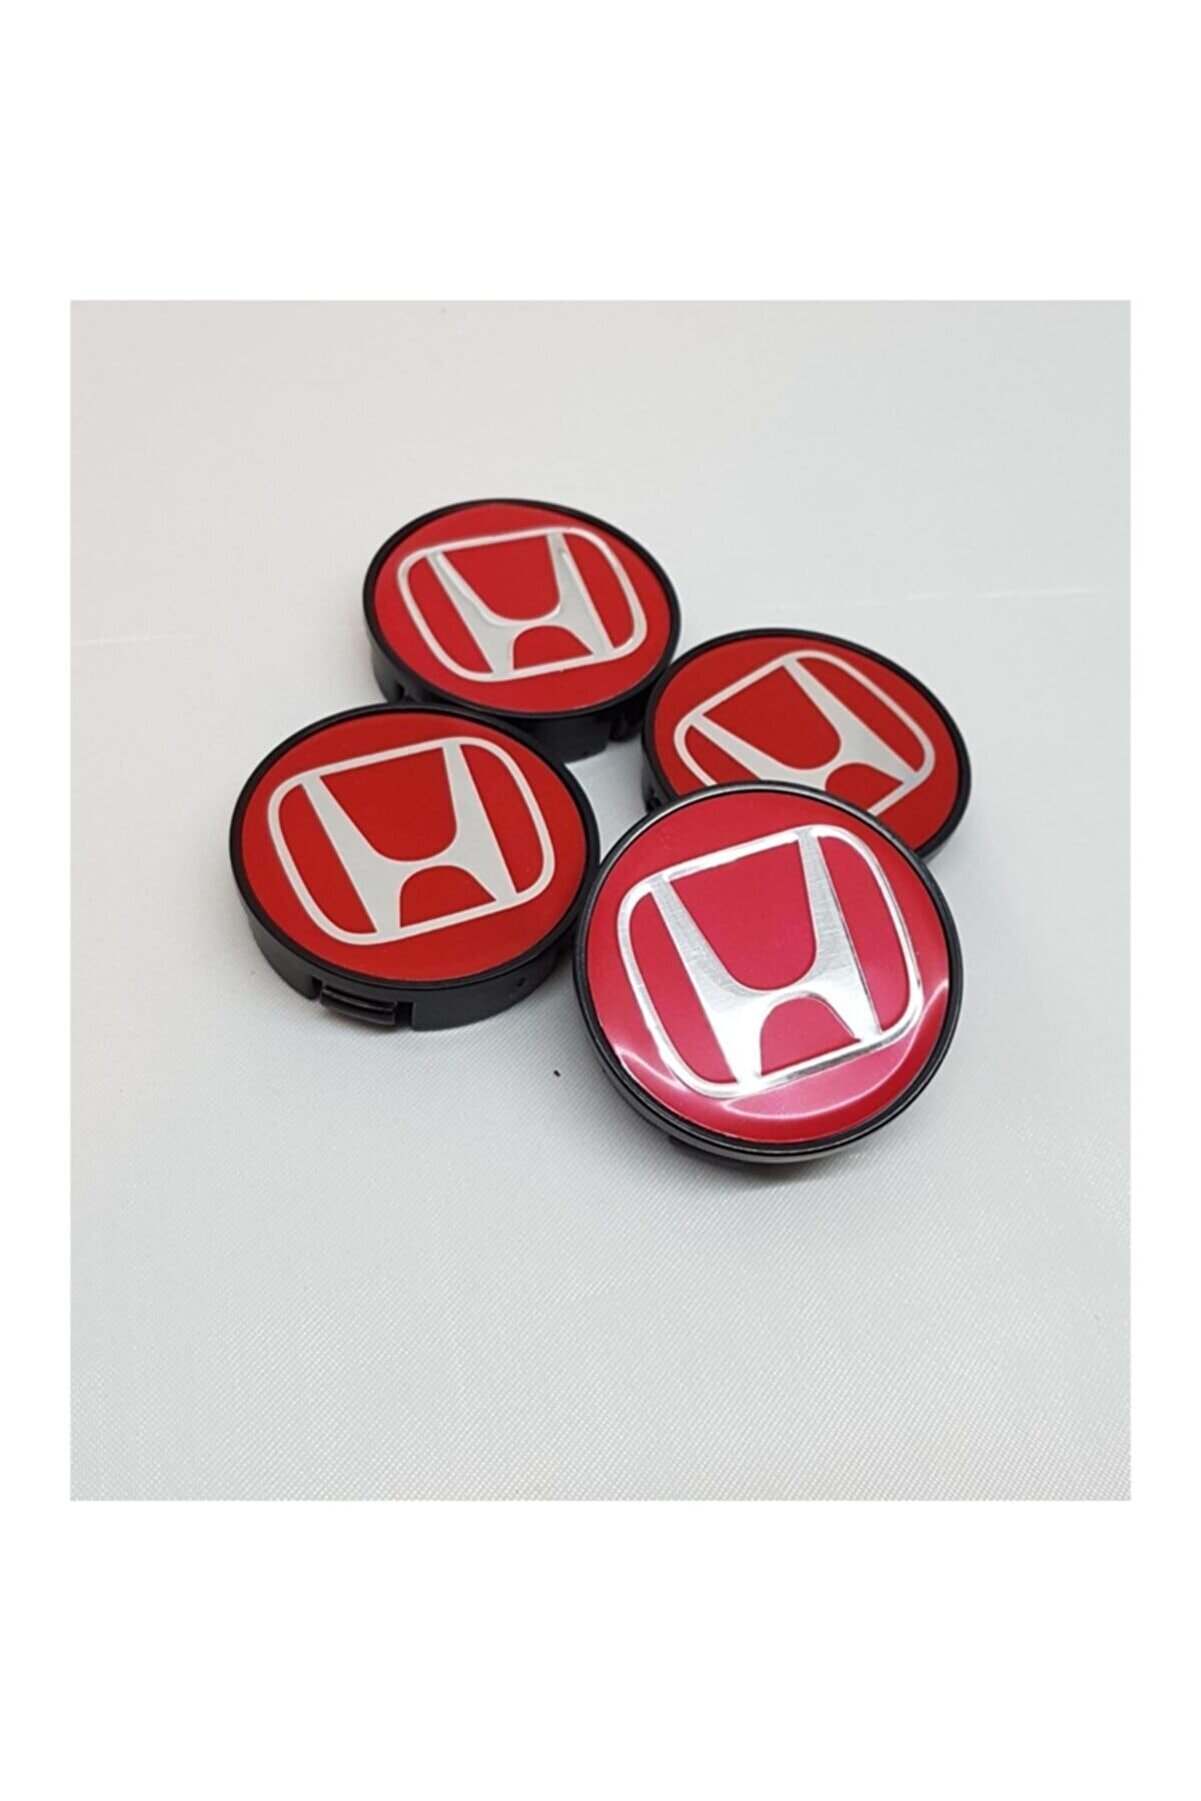 automars Honda Jant Göbeği Kırmızı 58-55mm 4'lü Set